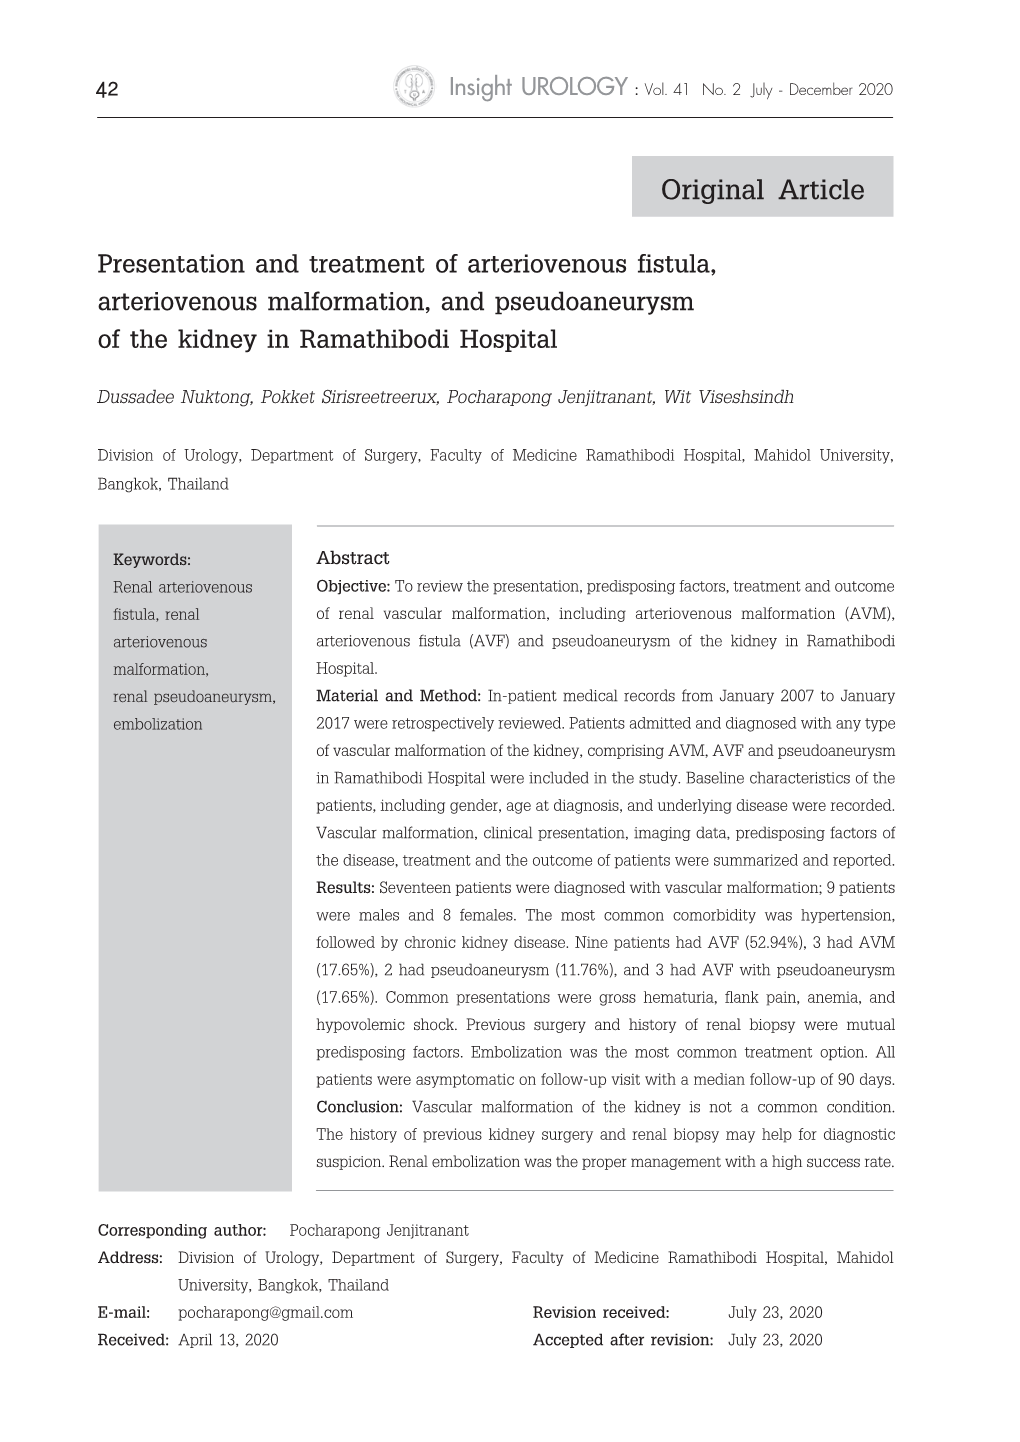 Presentation And Treatment Of Arteriovenous Fistula Arteriovenous